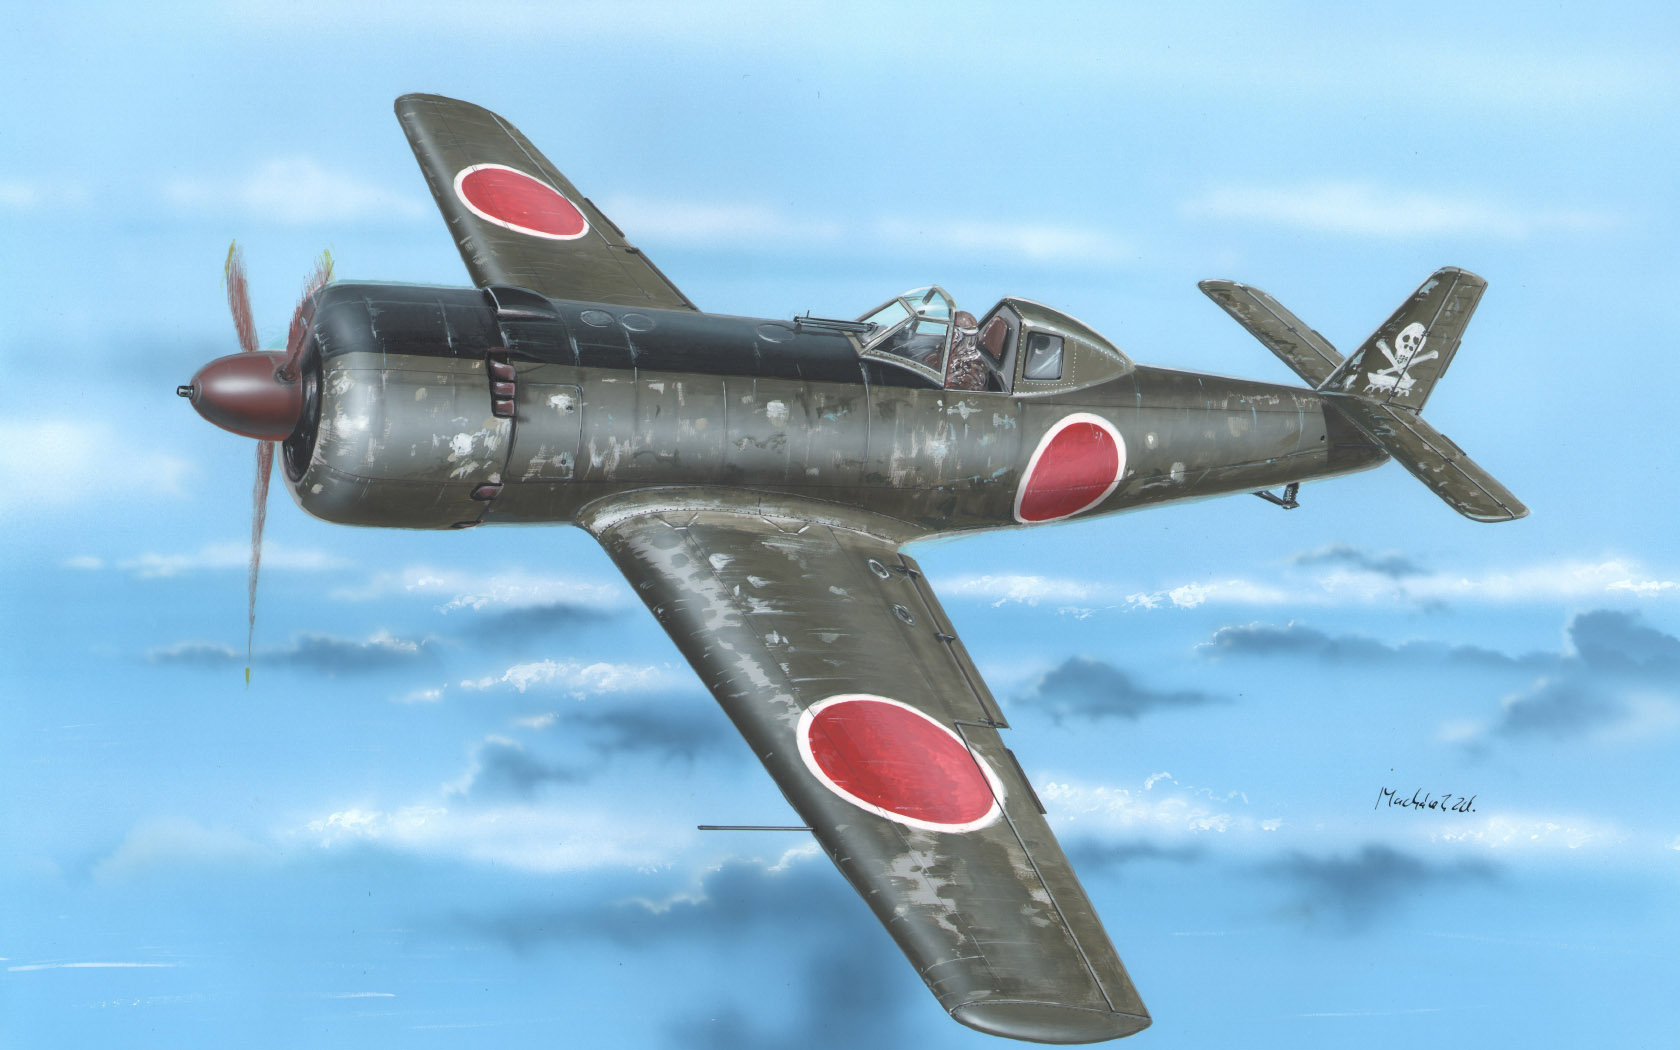 General 1680x1050 war aircraft army military Nakajima Ki-115 military vehicle sky clouds artwork